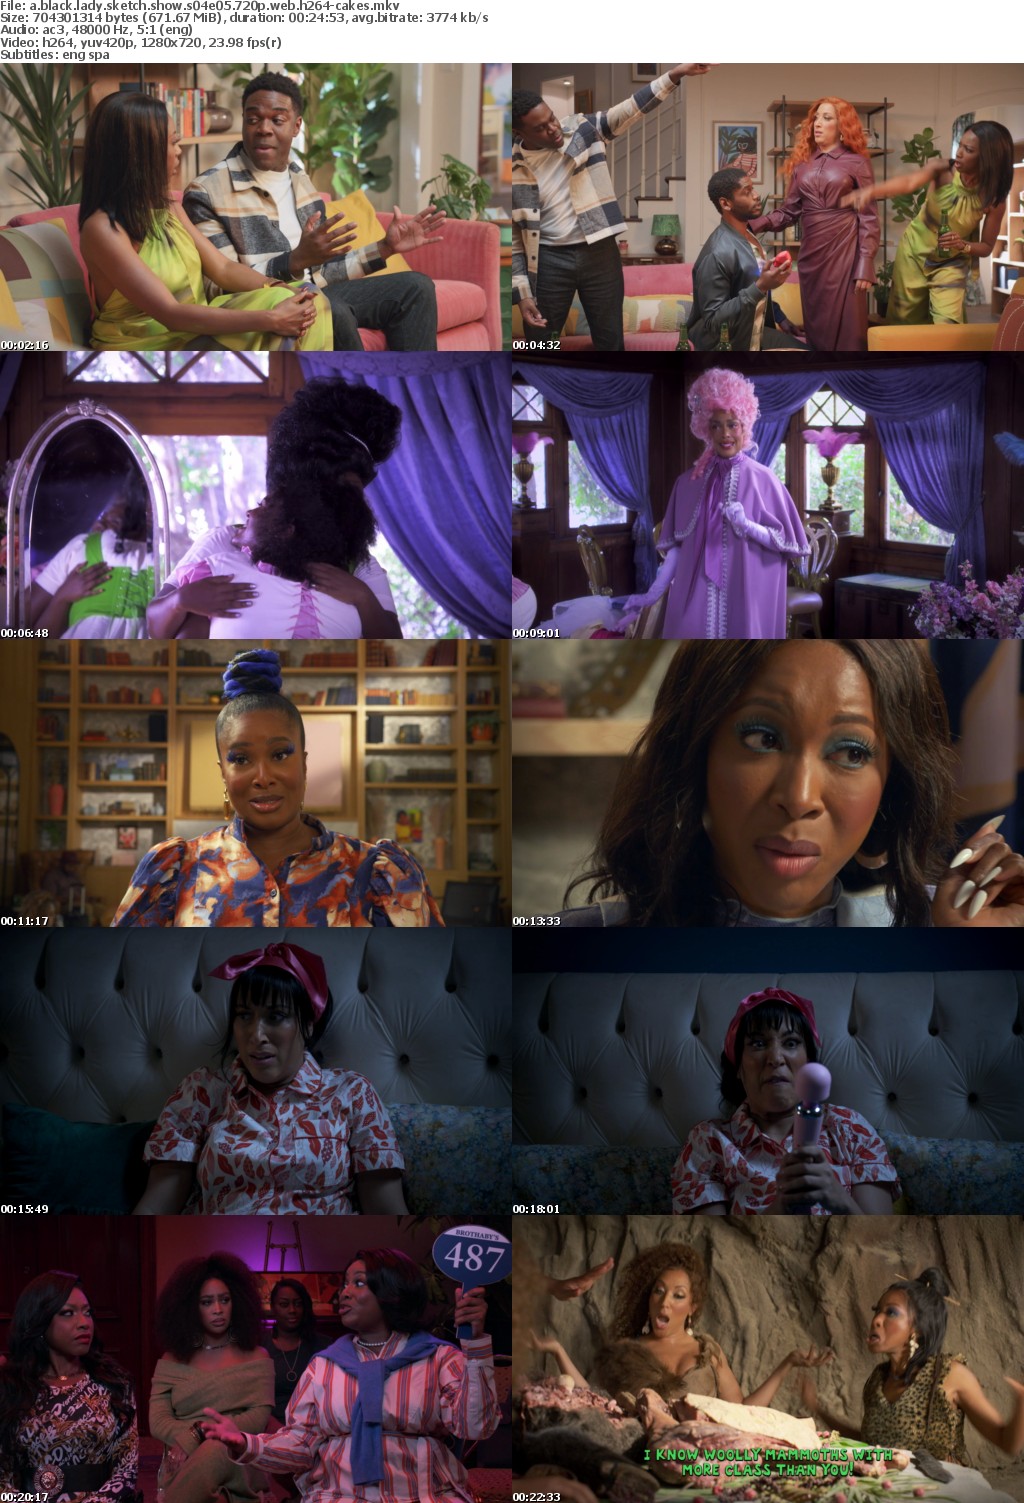 A Black Lady Sketch Show S04E05 720p WEB H264-CAKES